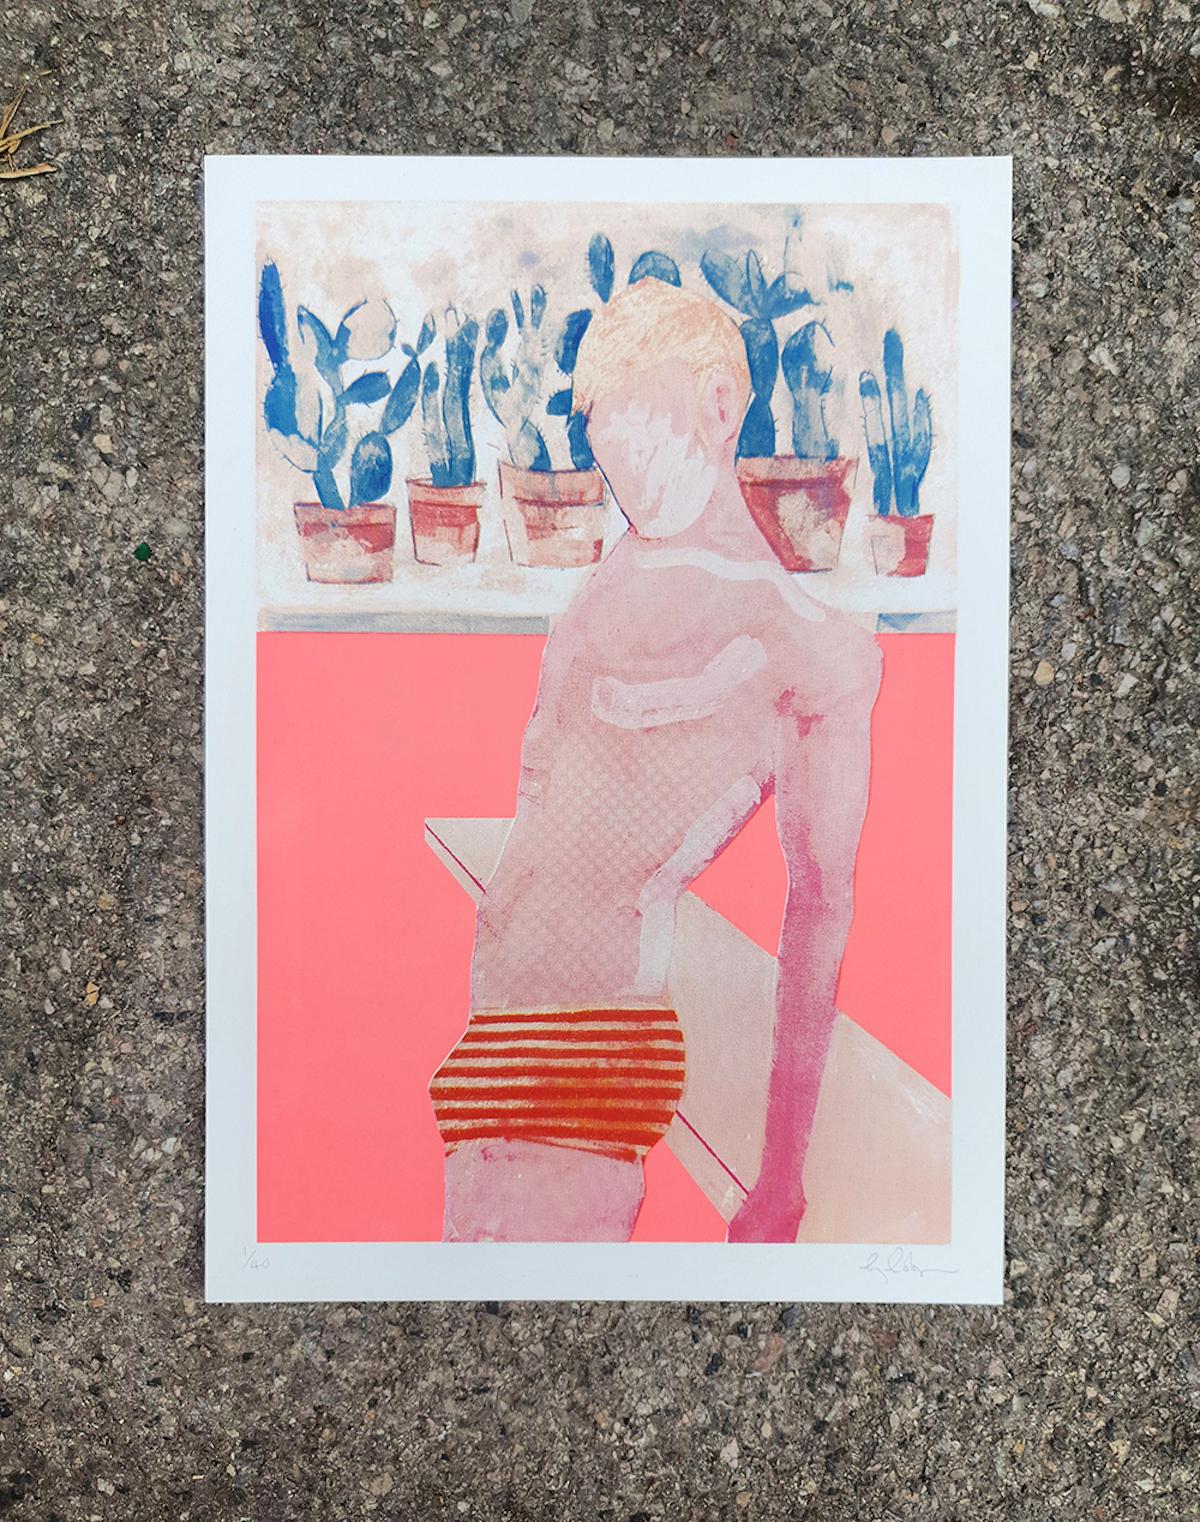 Pool Boy - Fluro, Figurative pop art, Handmade Screen-print, David Hockney style - Pink Still-Life Print by Gavin Dobson